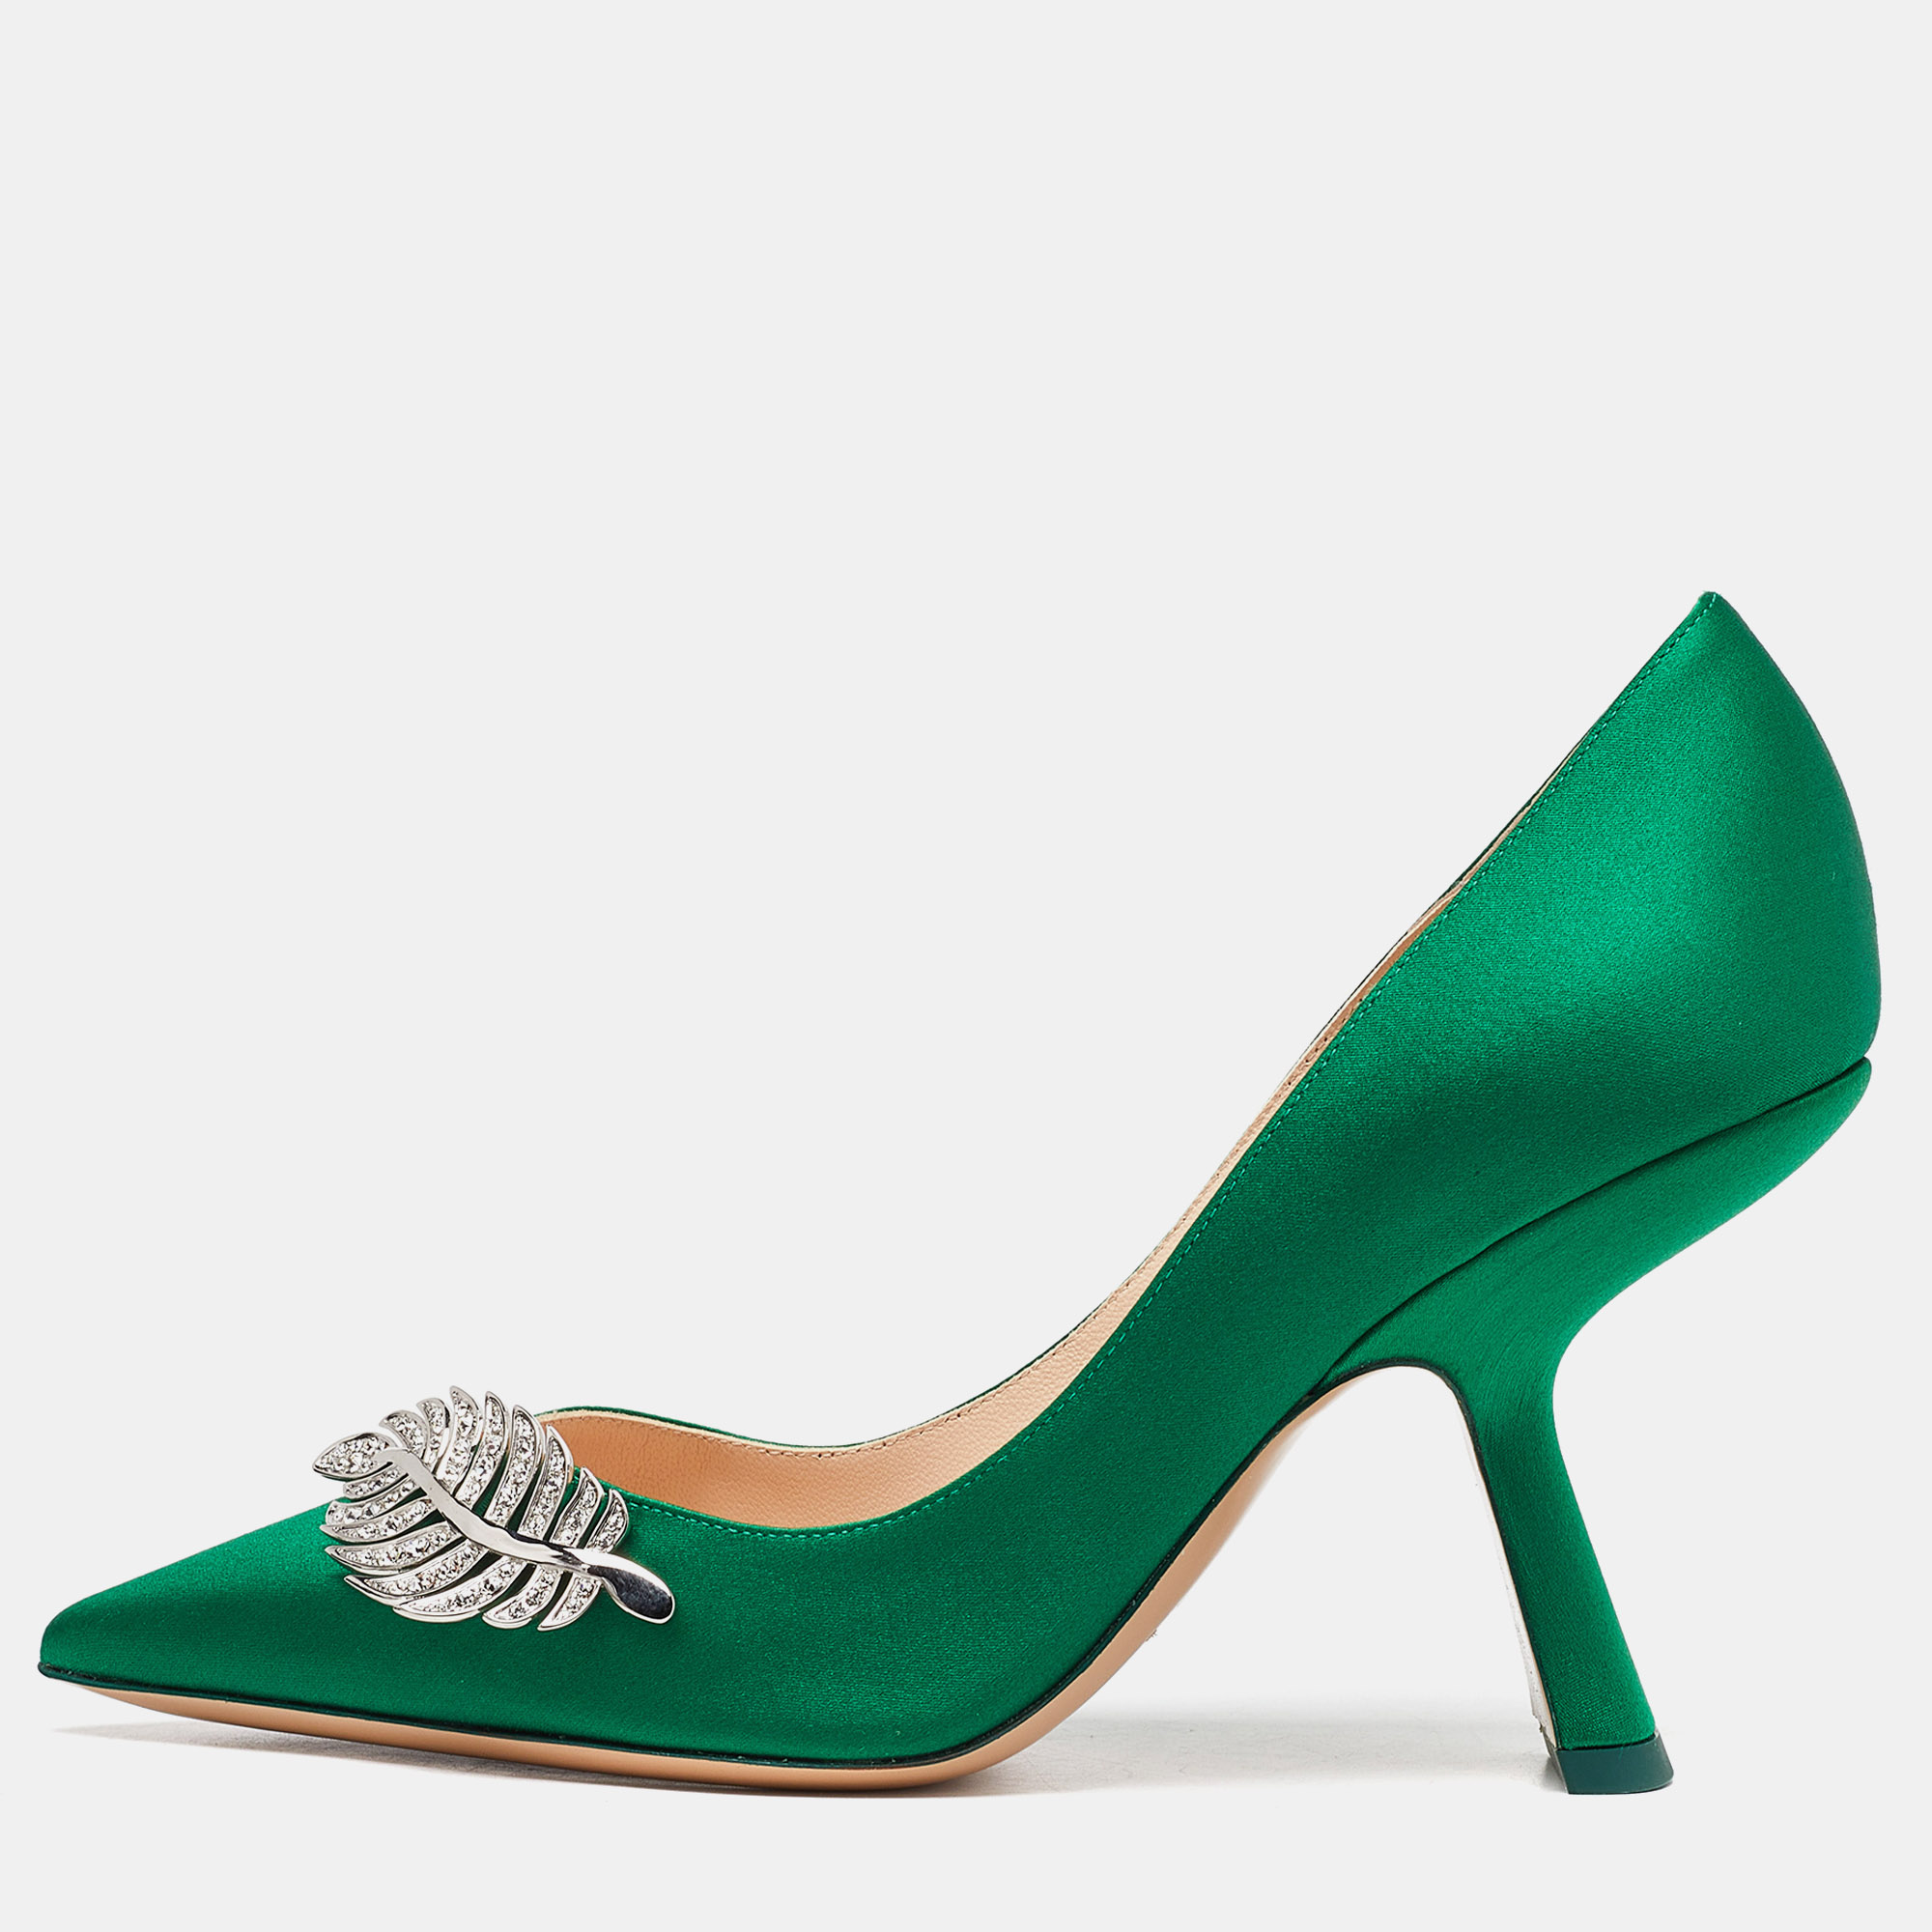 Nicholas kirkwood green satin crystal embellished pointed toe pumps size 38